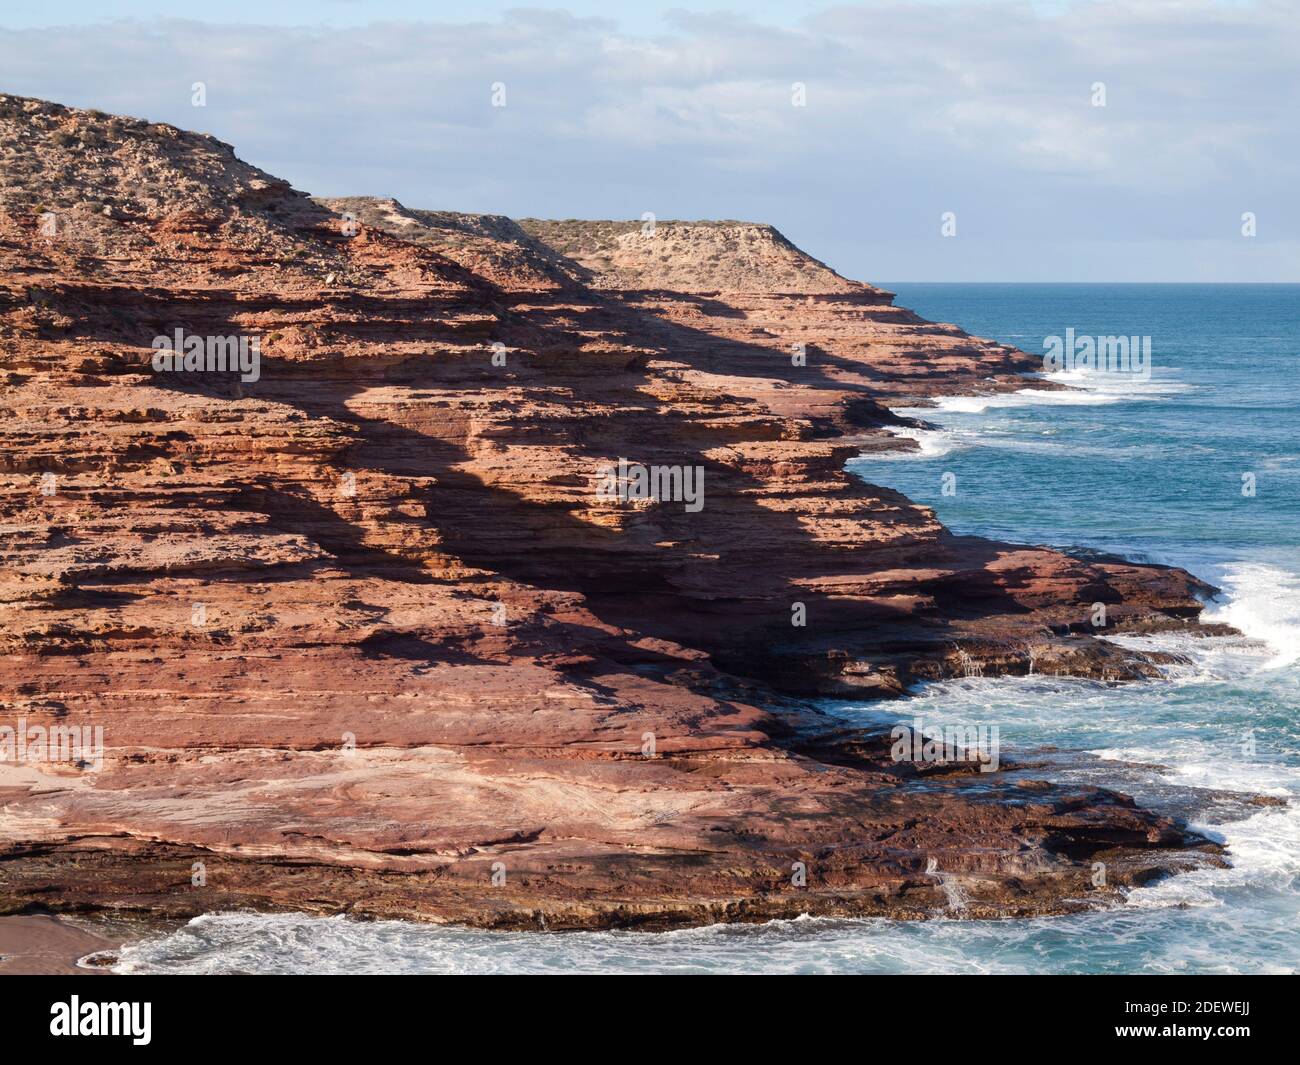 Eroded red sandstone seacliffs above the Indian Ocean, Kalbarri National Park, Western Australia. Stock Photo